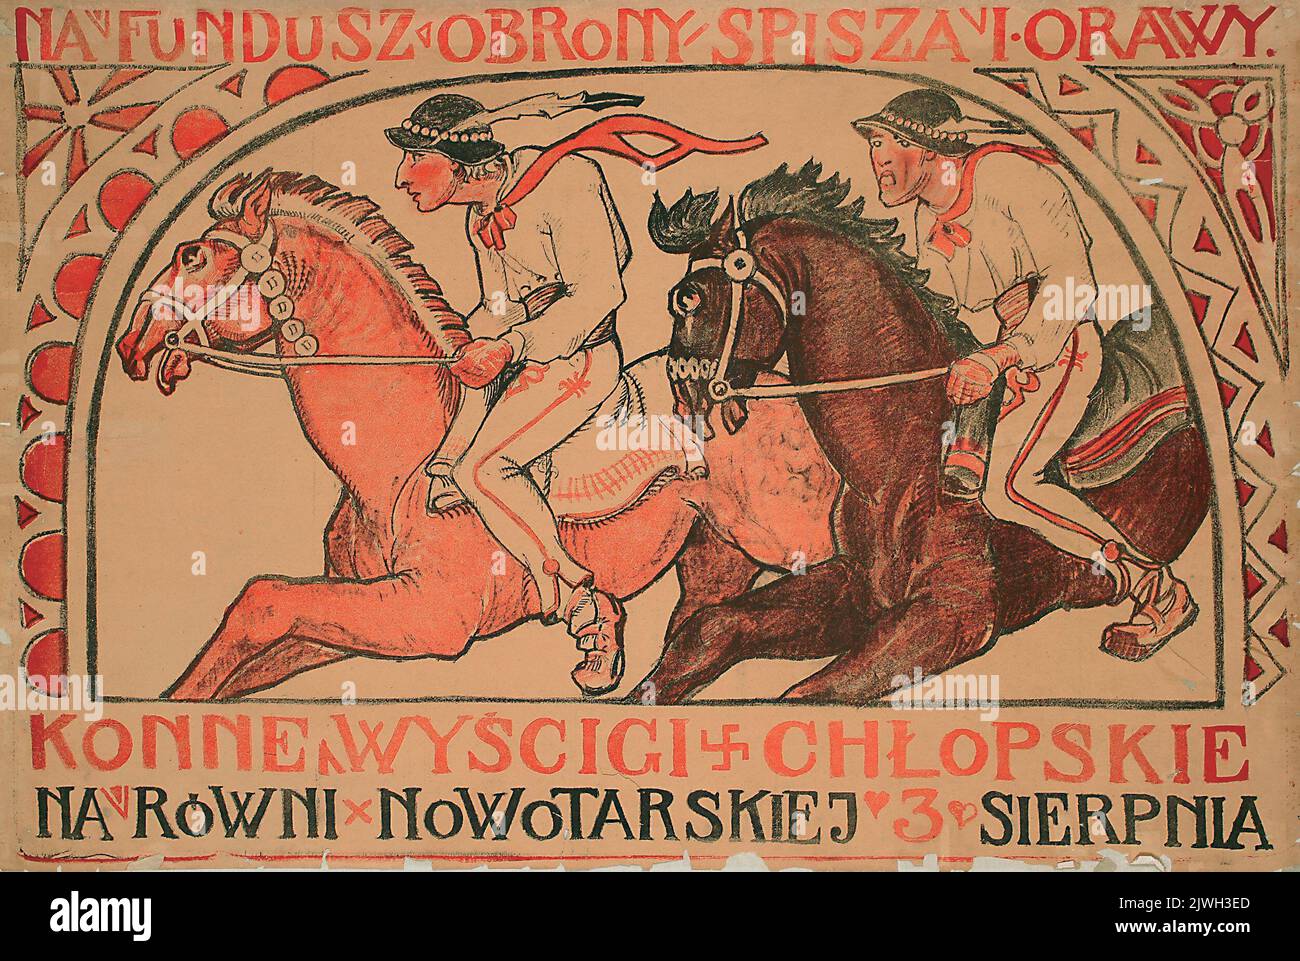 wyścigi równi nofotarskiej. Sichulski, Kazimierz (1879-1942), auteur, inconnu, éditeur Banque D'Images